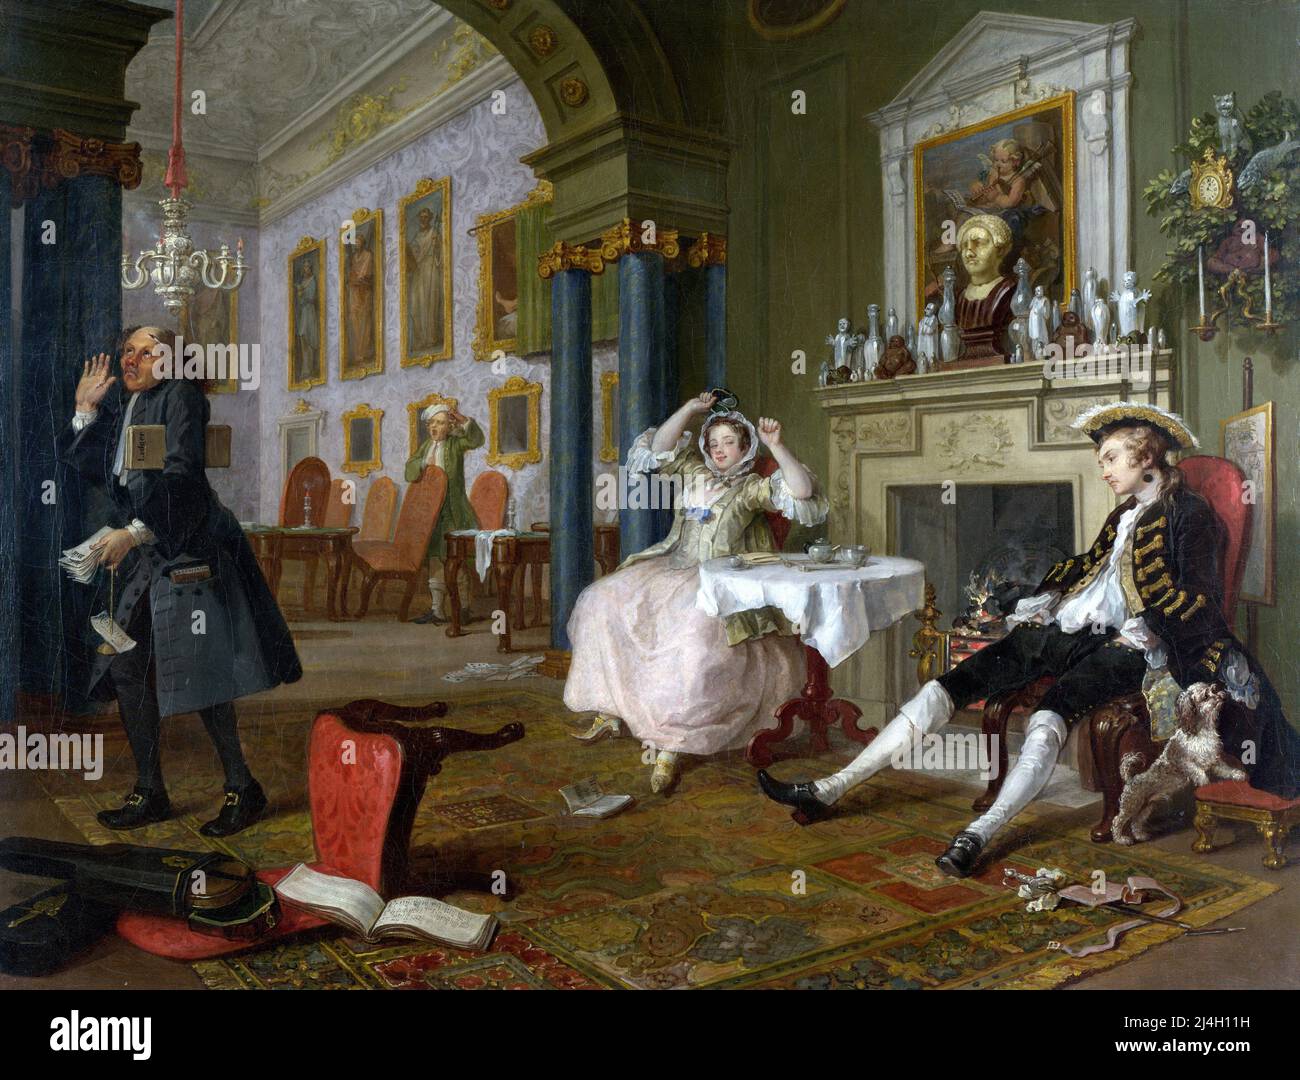 Matrimonio à-la-mode, poco después del matrimonio (escena dos de seis). Pintura de William Hogarth Foto de stock